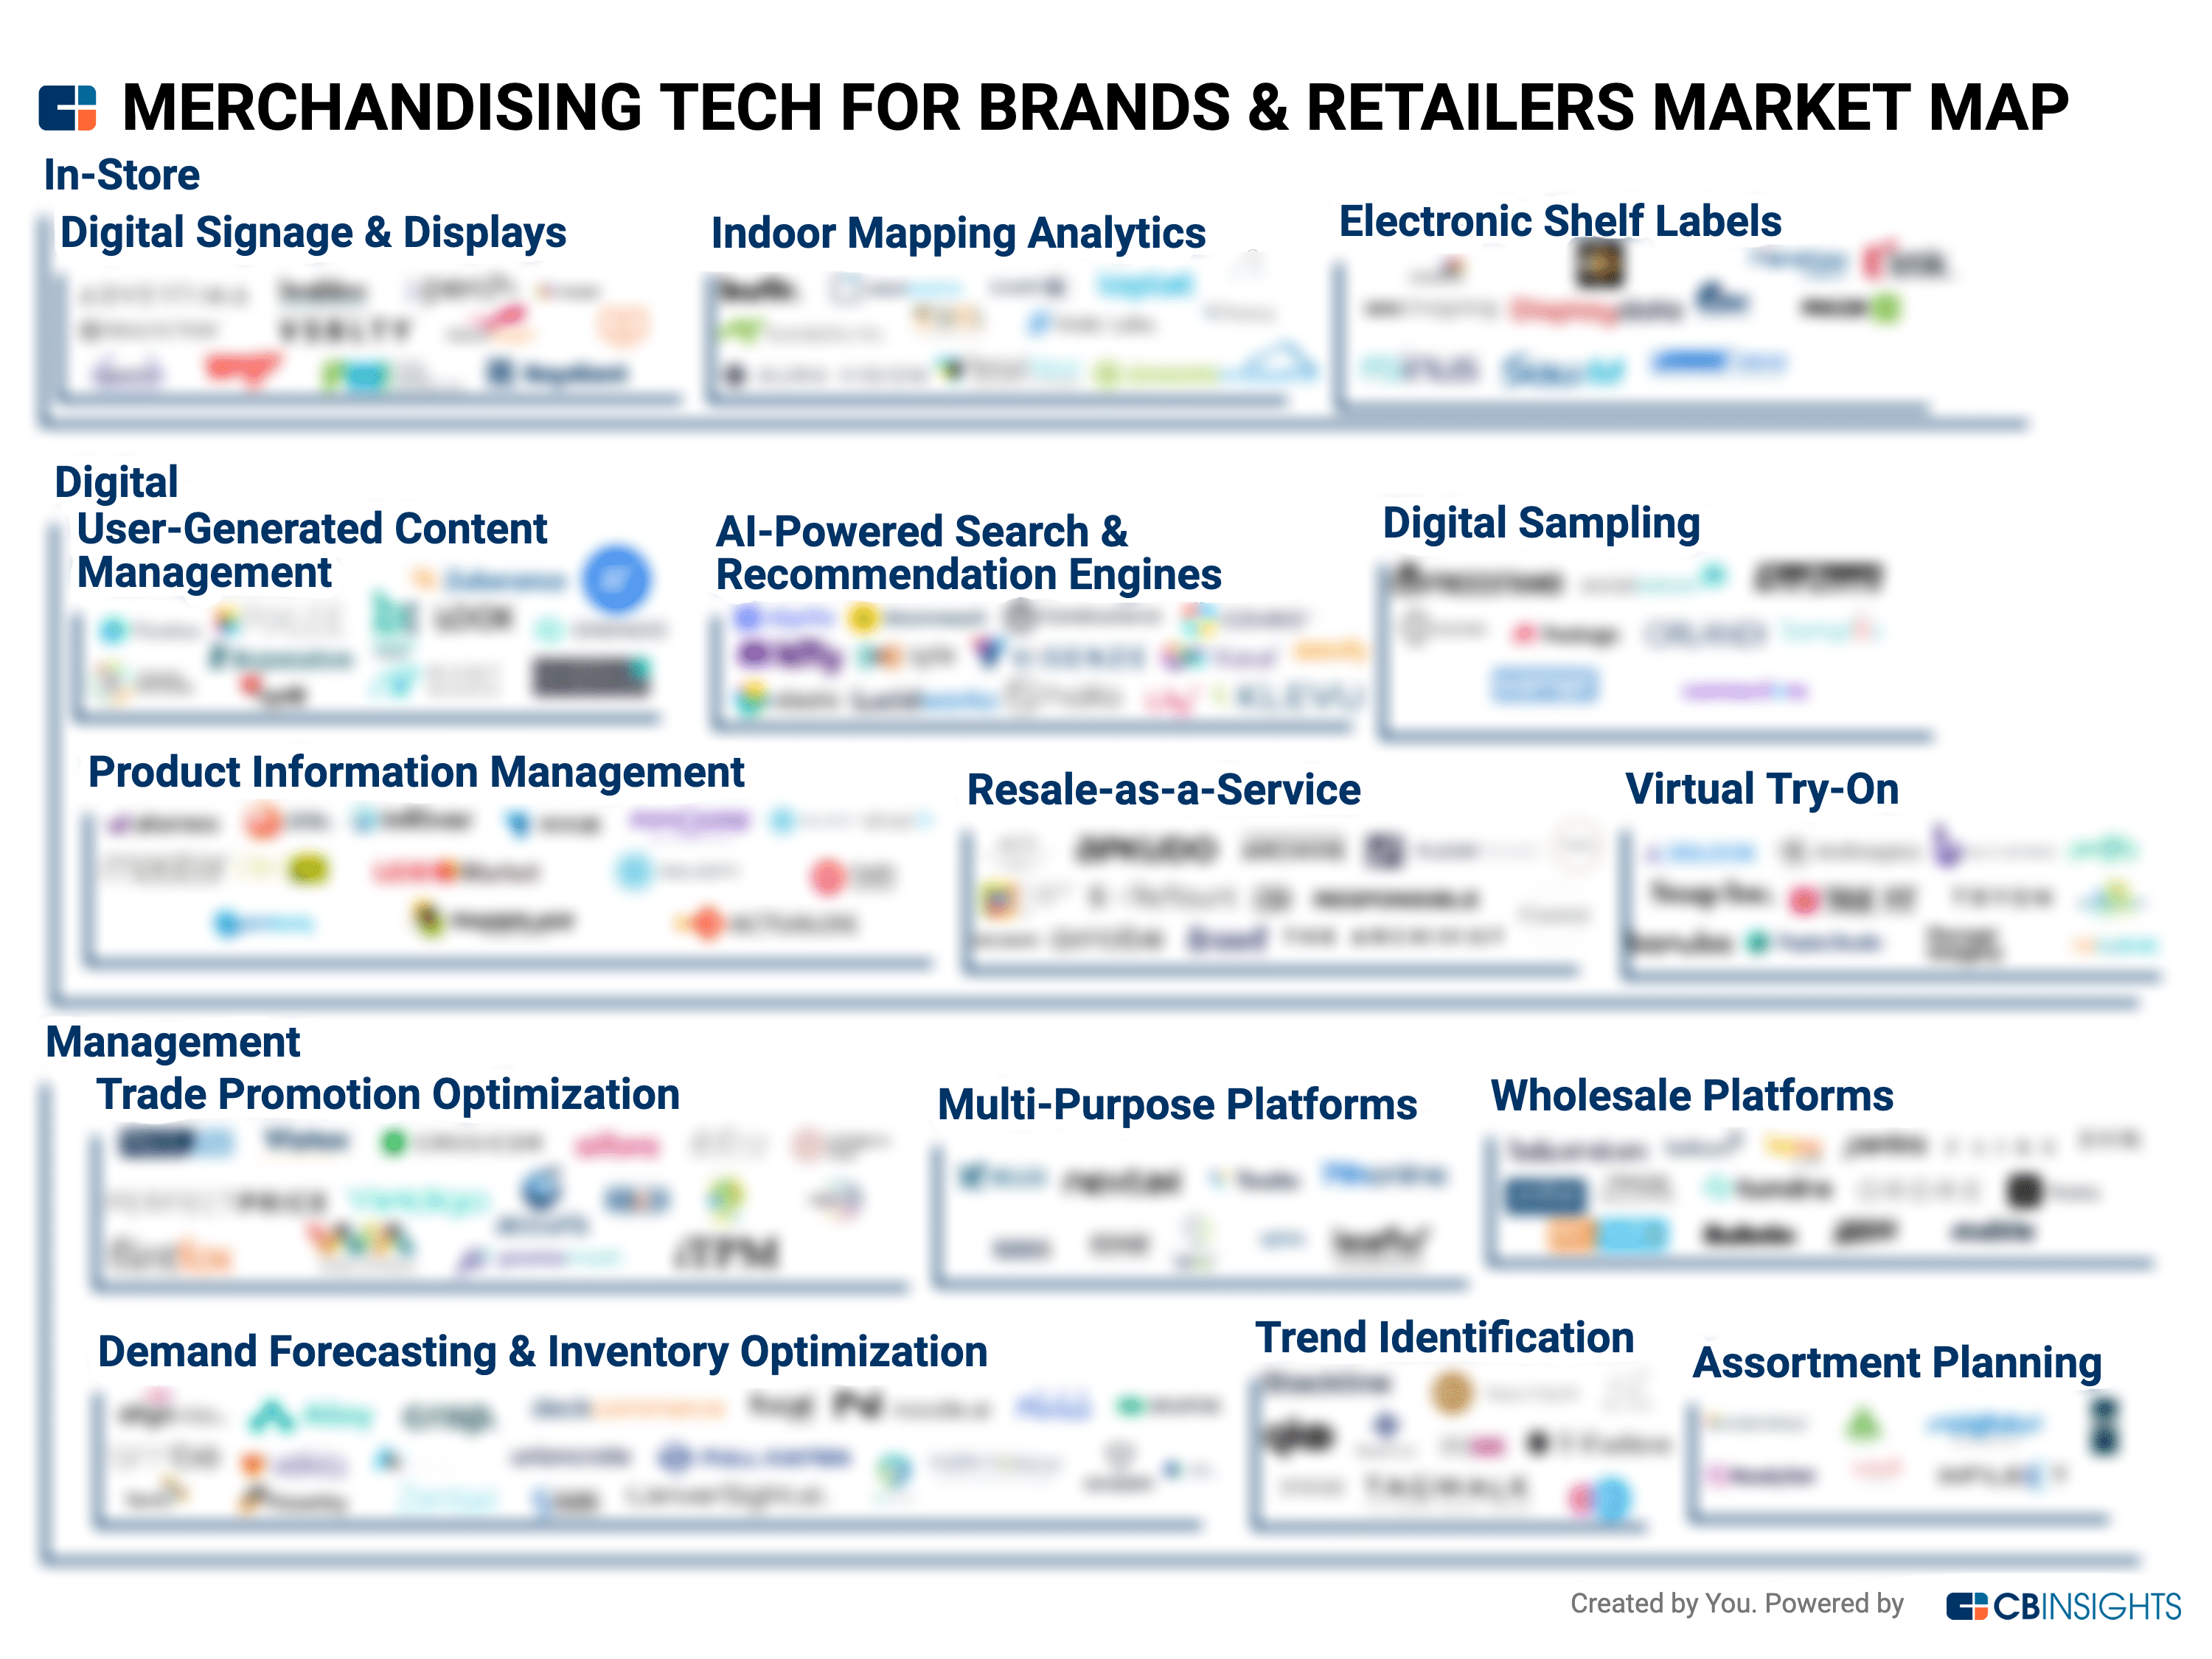 https://research-assets.cbinsights.com/2022/06/15114735/Merchandising-tech-for-brands-and-retailers-TMM-blur.png